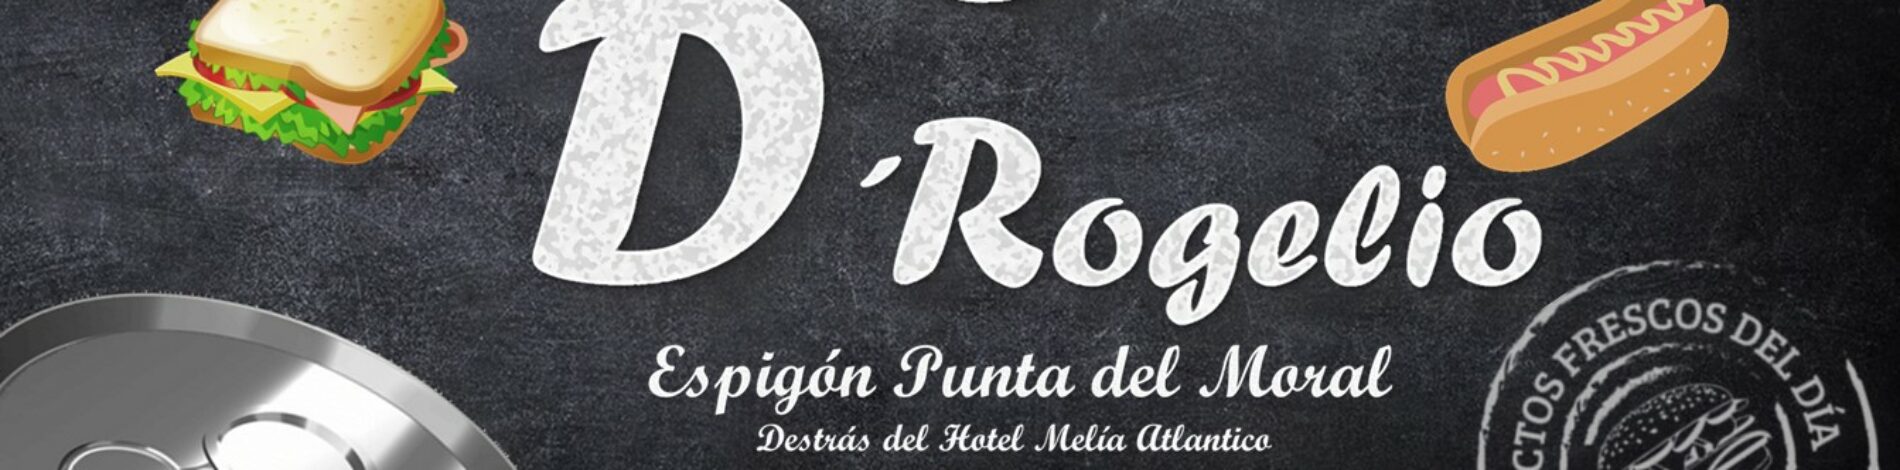 Burguer Rogelio